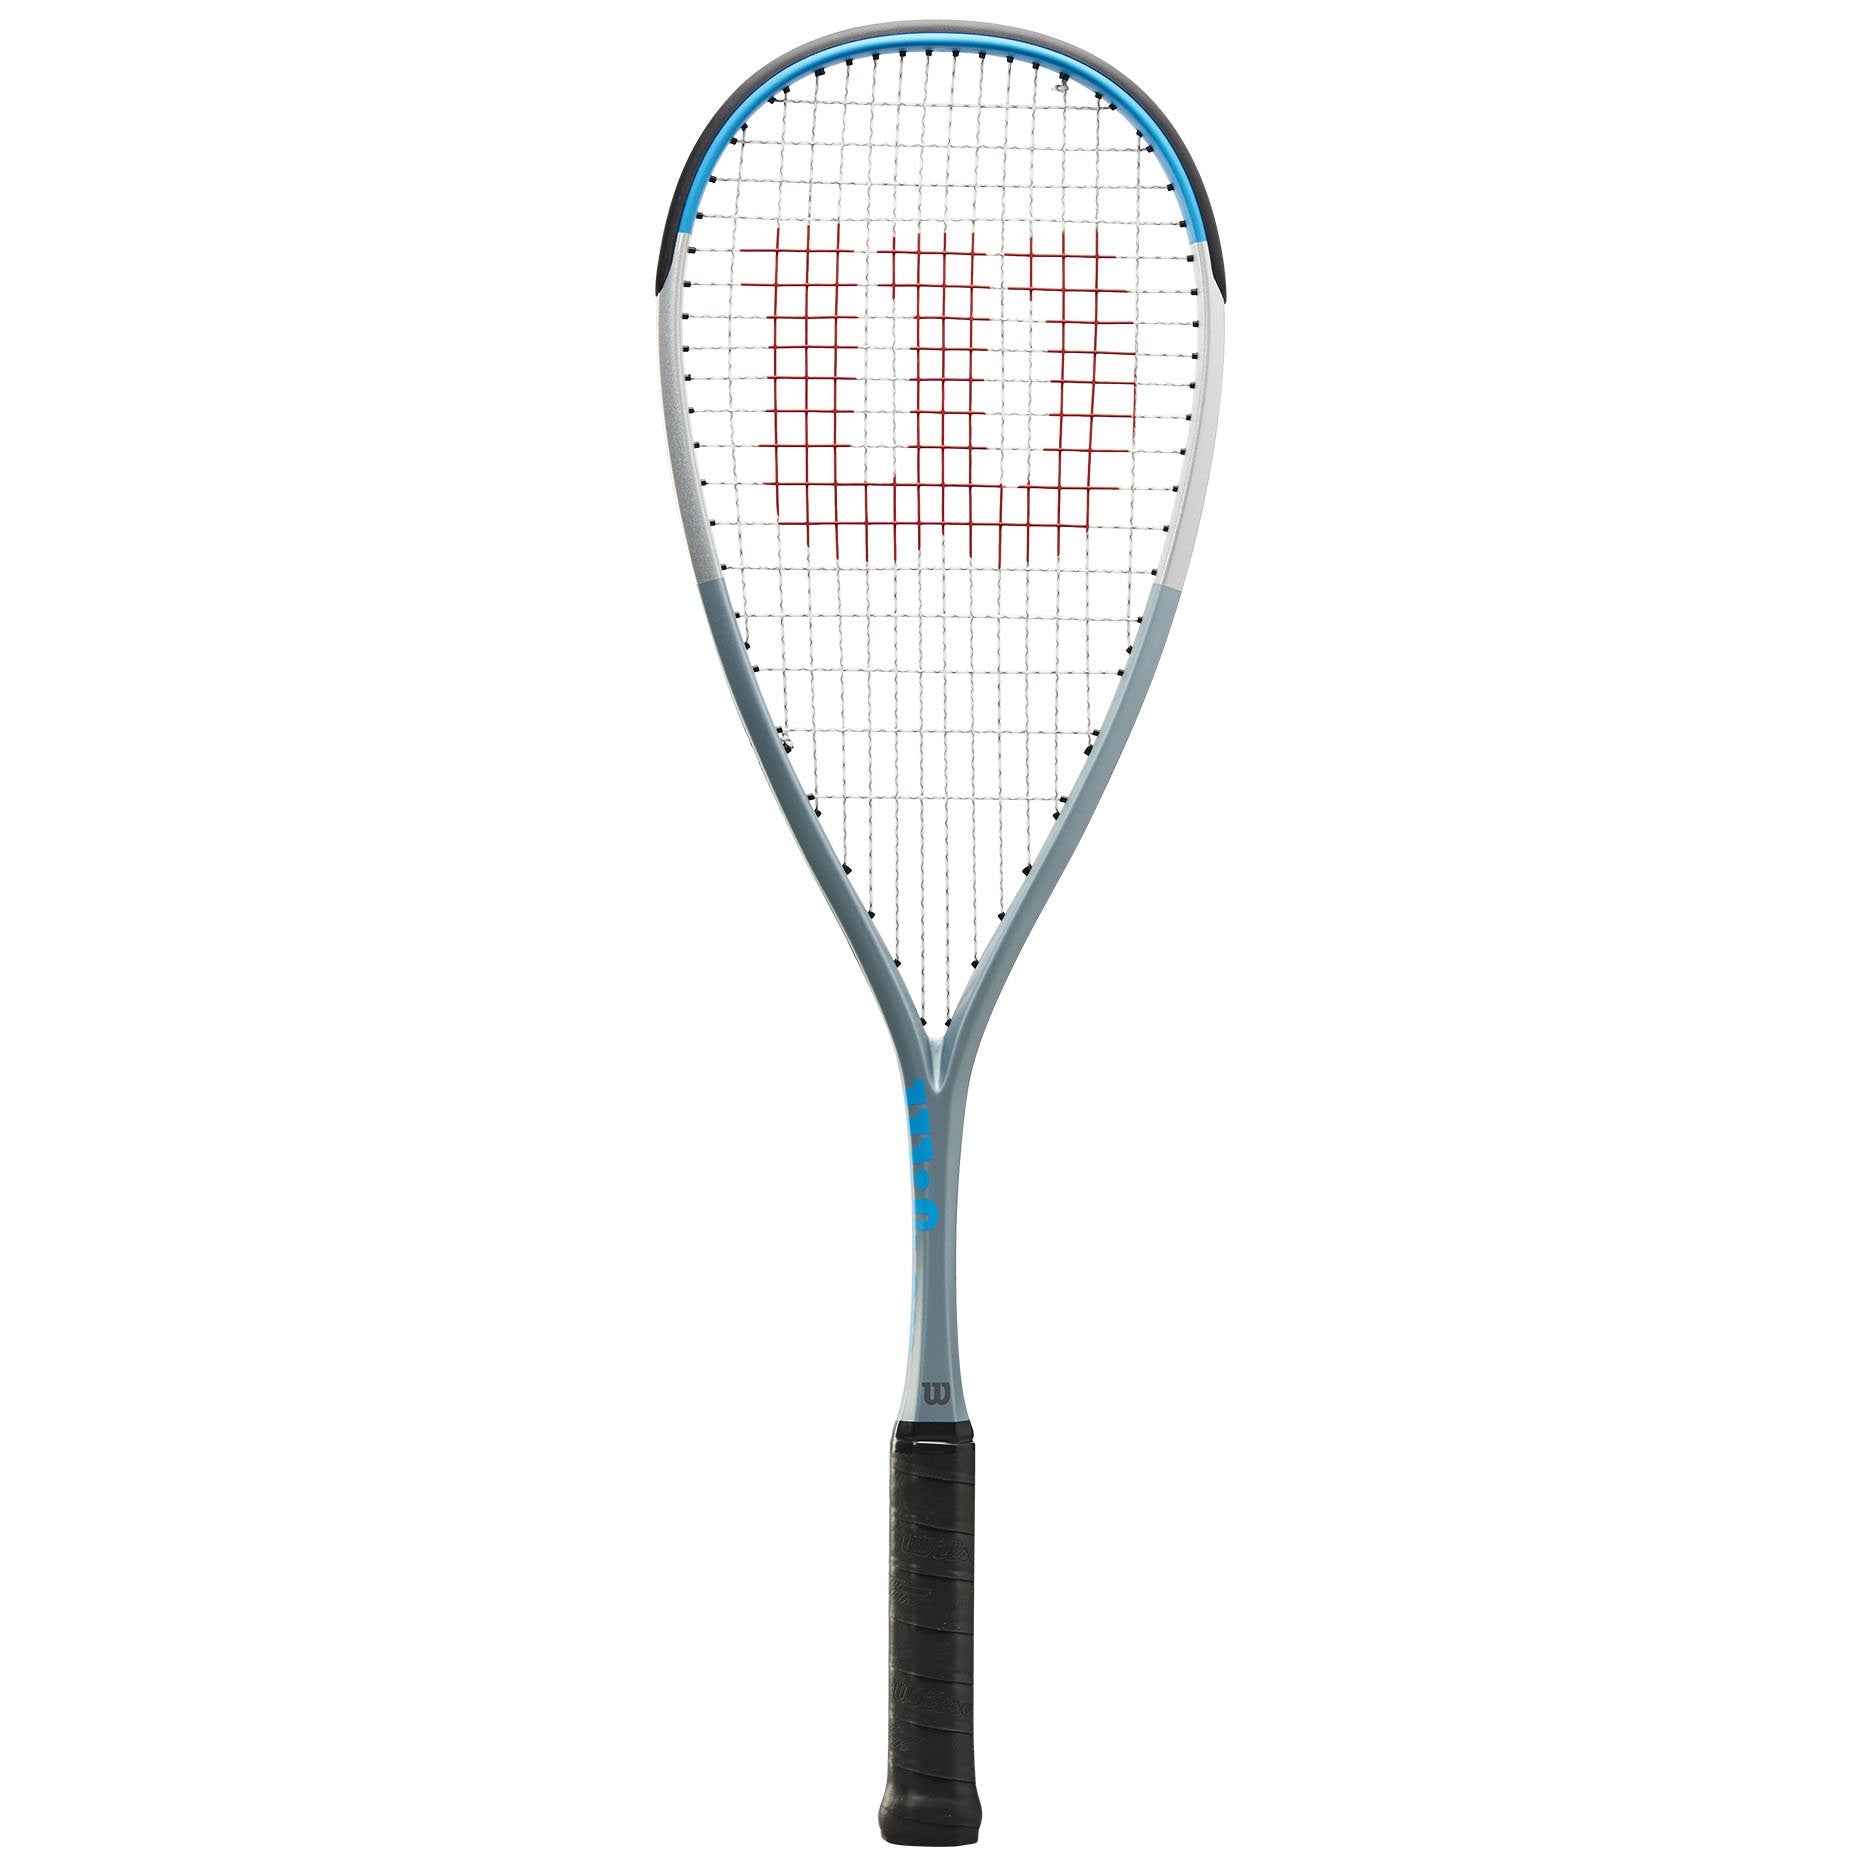 Wilson Ultra L Squash Racket